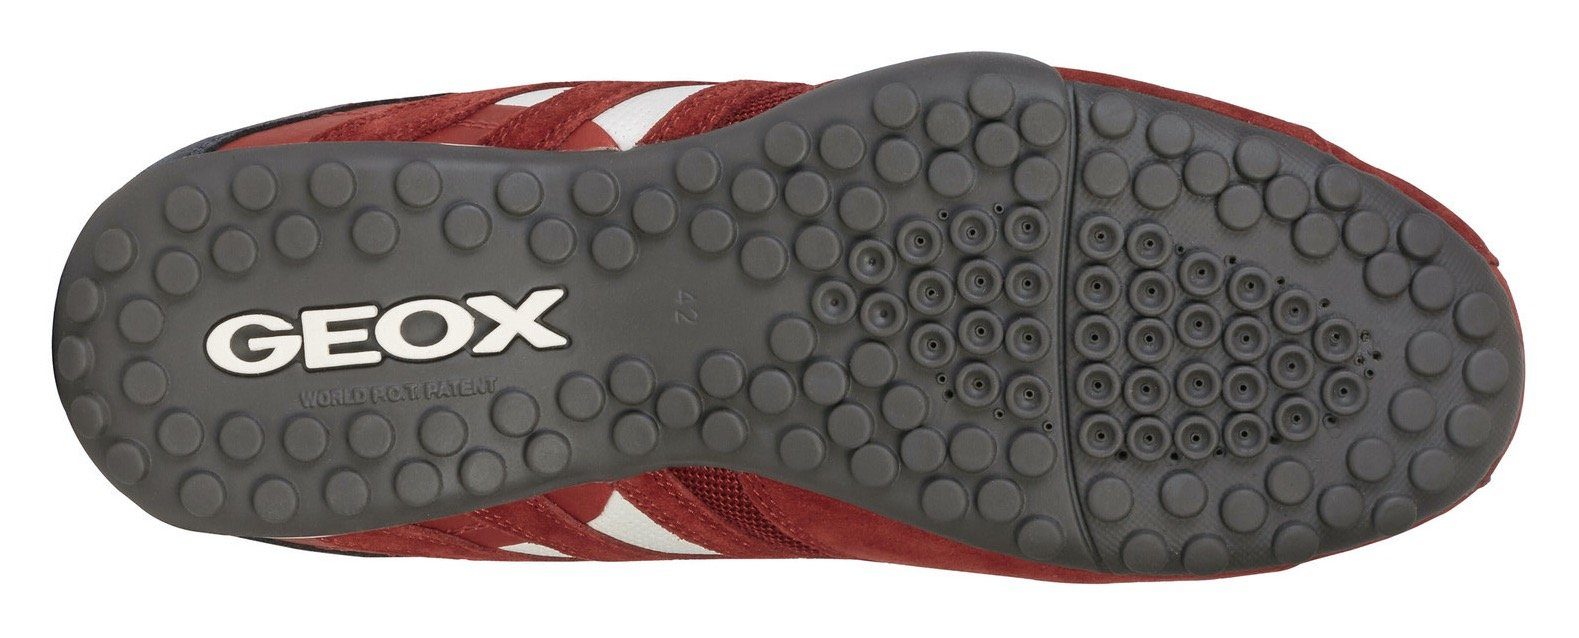 Spezial Geox mit Snake Geox rot-grau im Sneaker Membrane Materialmix